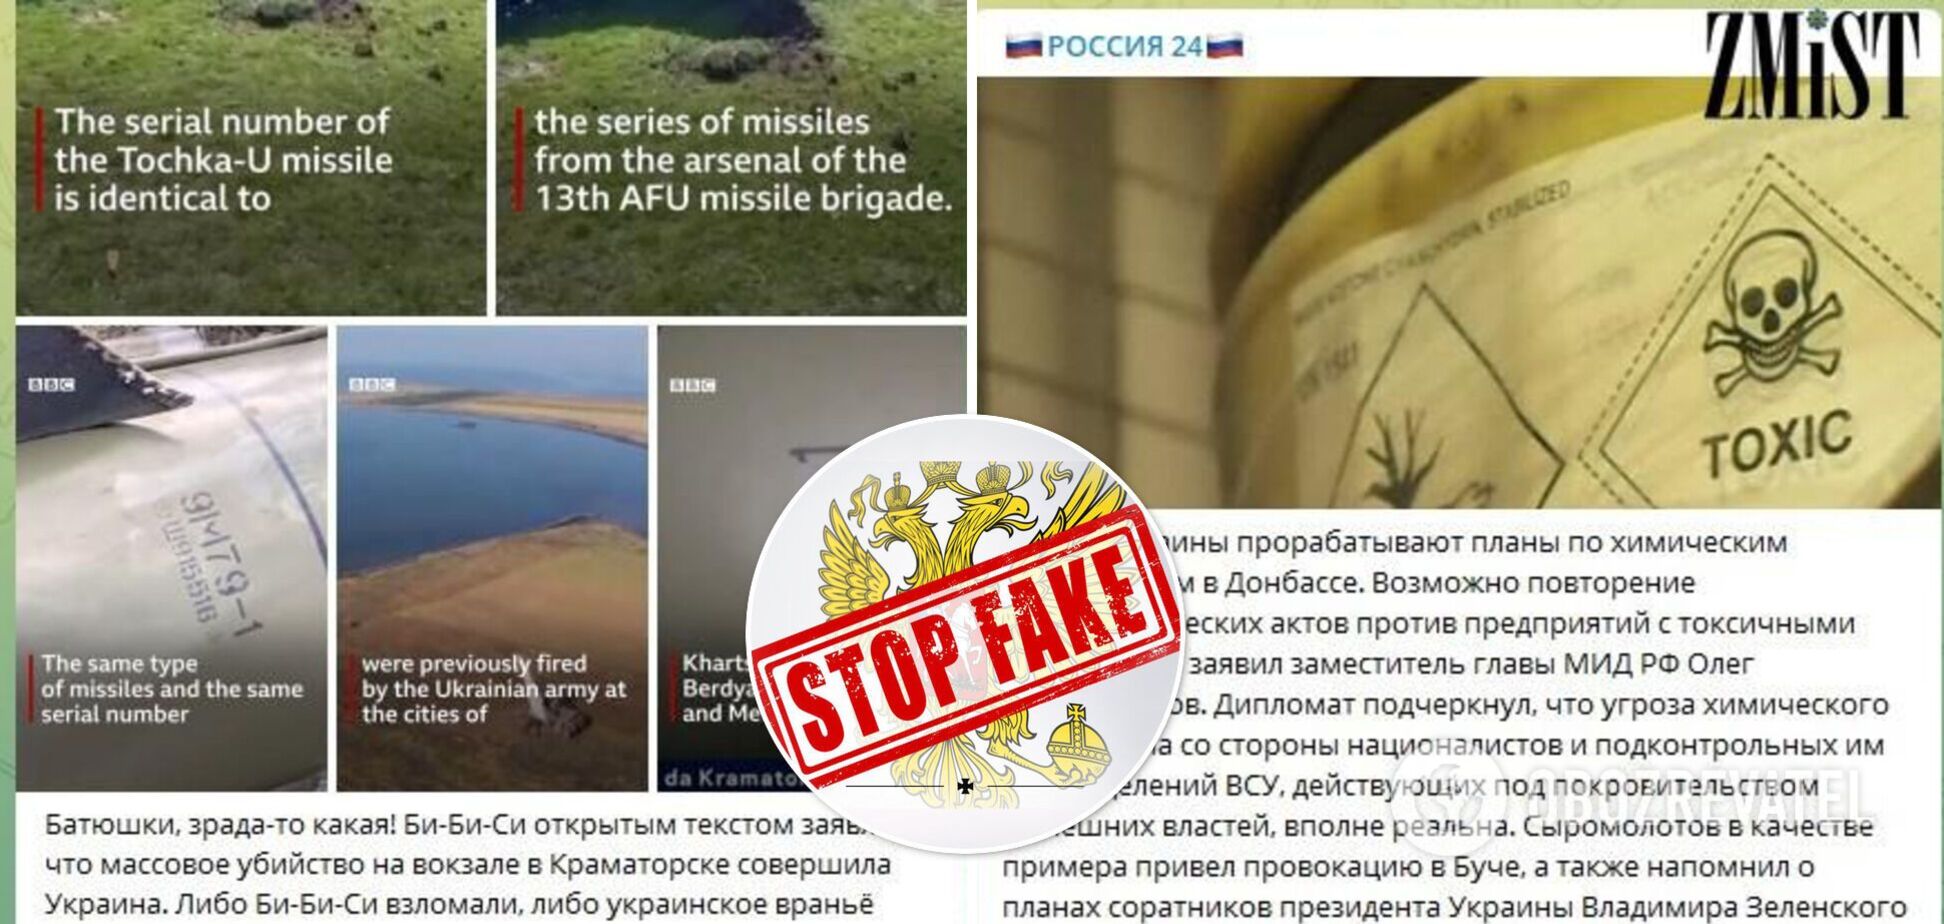 Украина обстреляла Краматорск и планирует химические атаки на Донбассе: российские фейки за 13 апреля